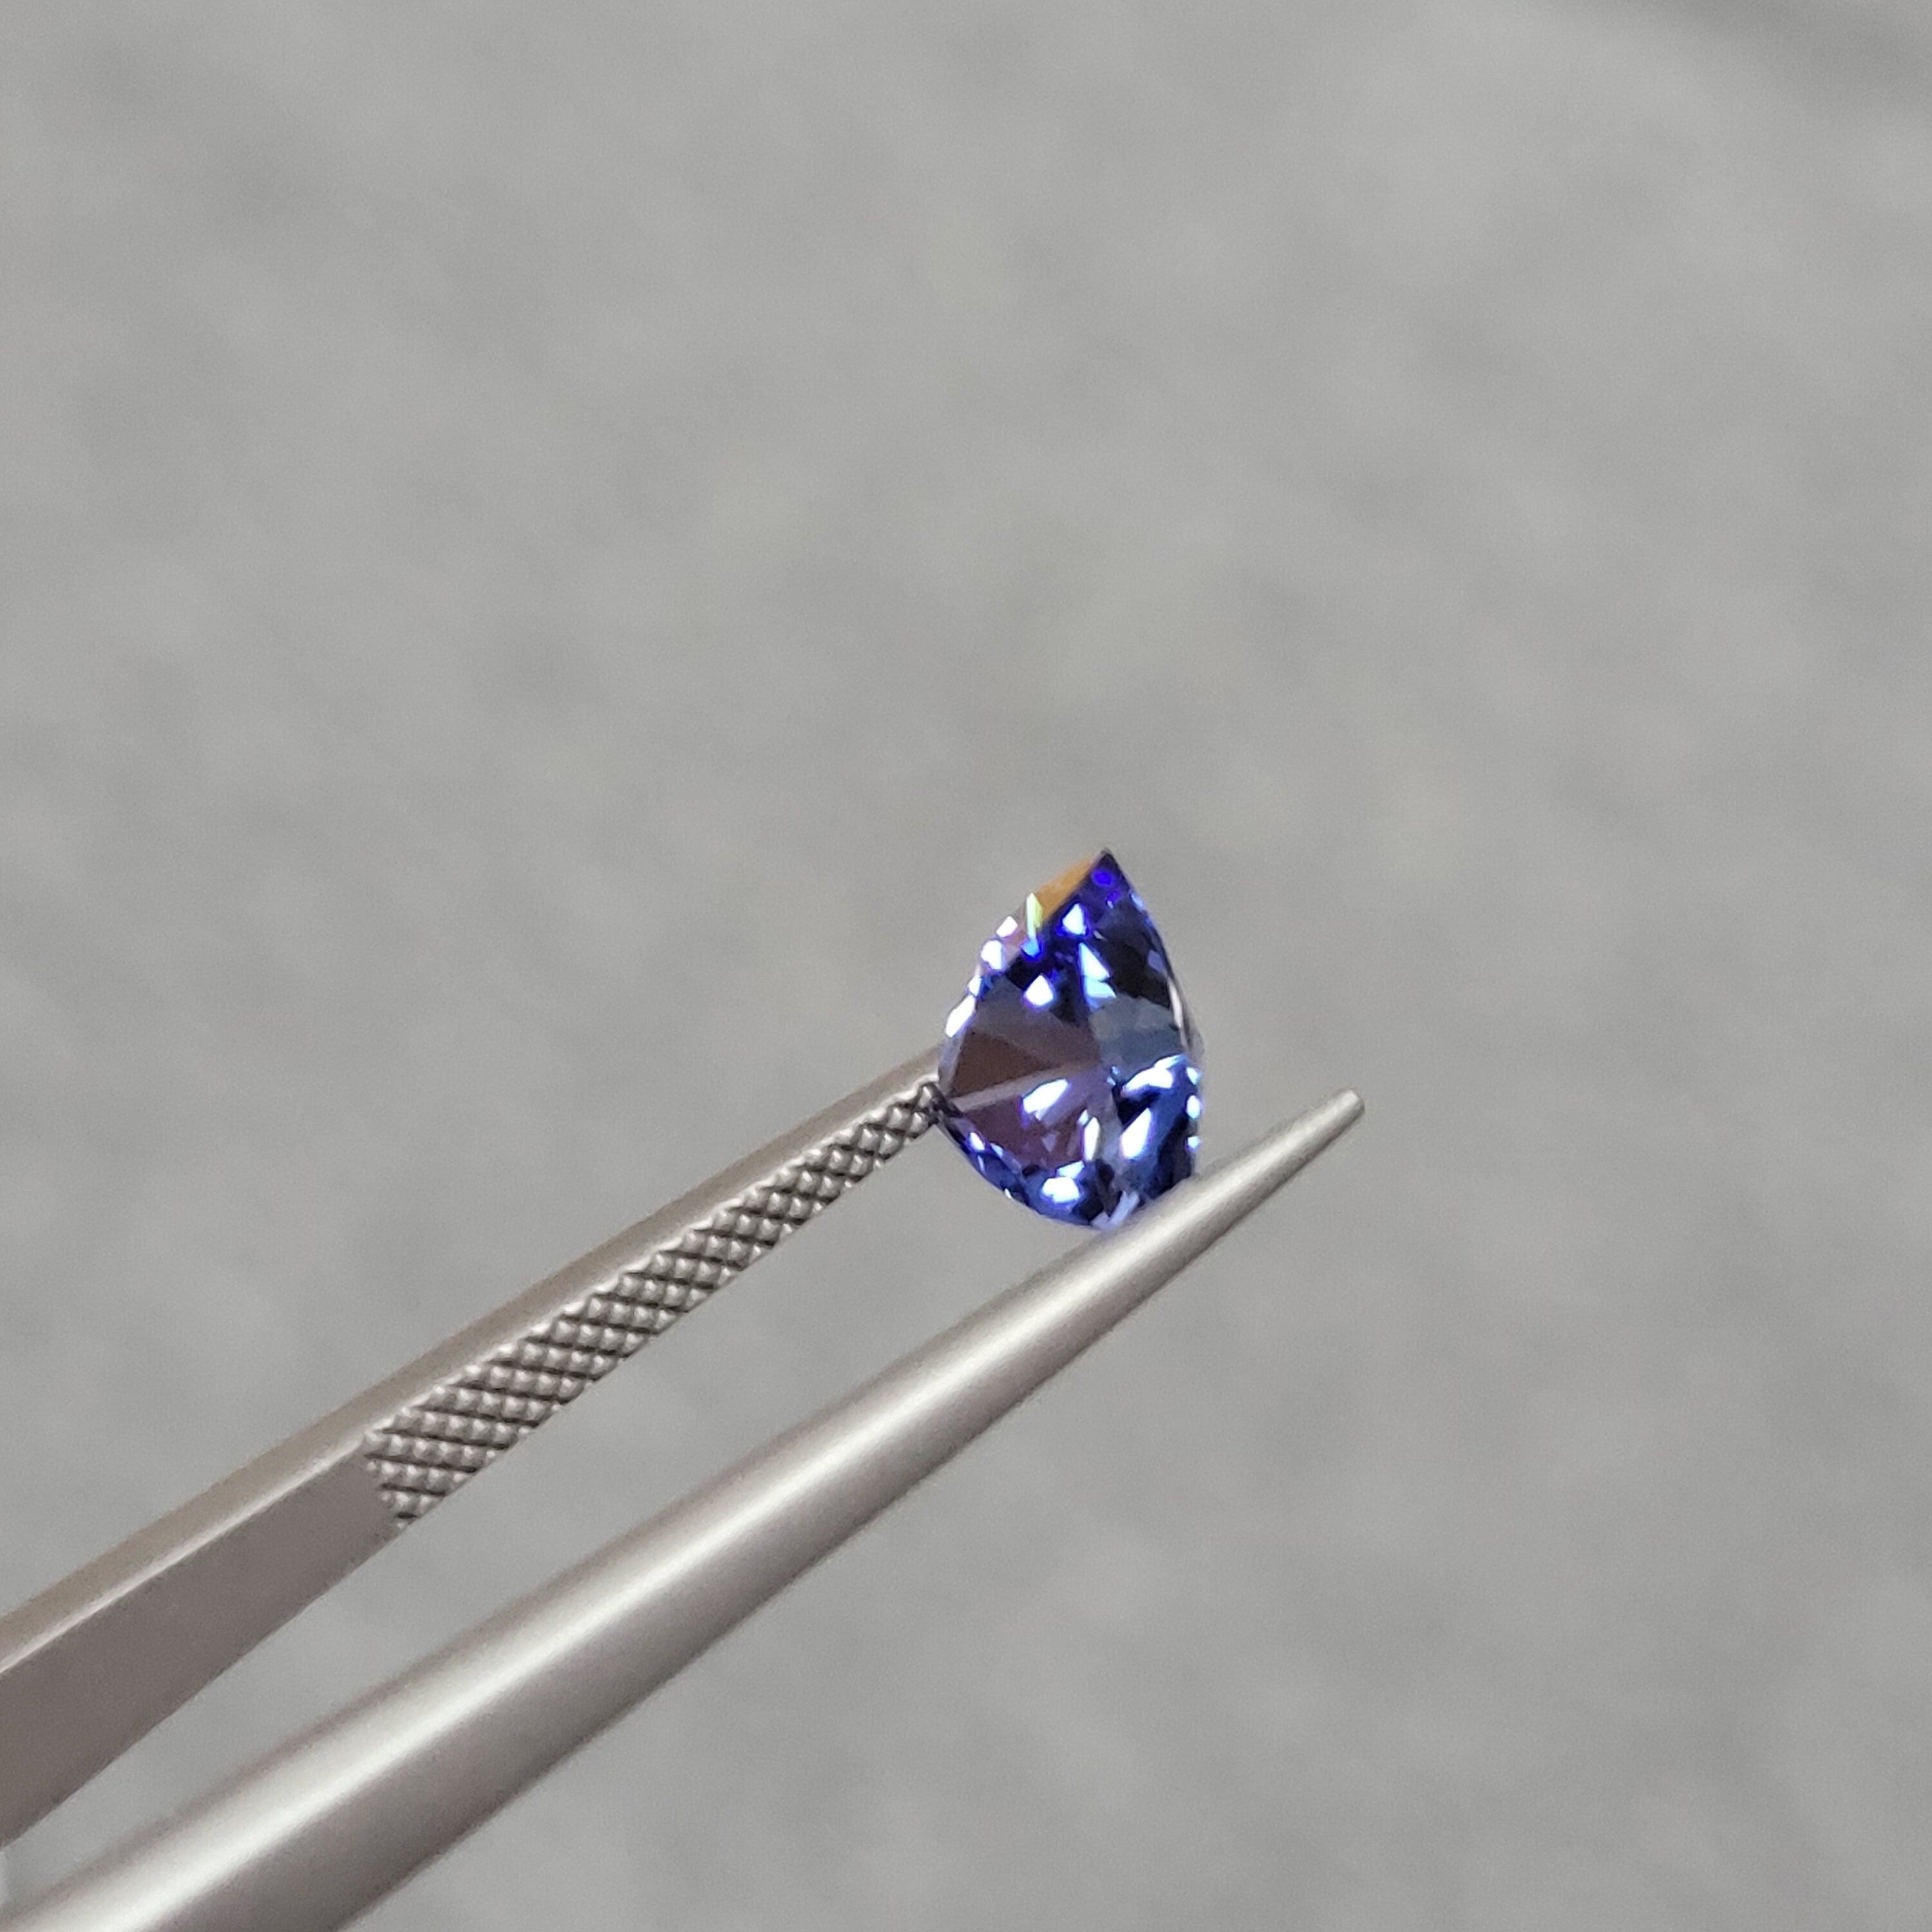 8mm loose sapphire 2.19ct lab grown trillion faceted ceylon sapphire, blue gemstone